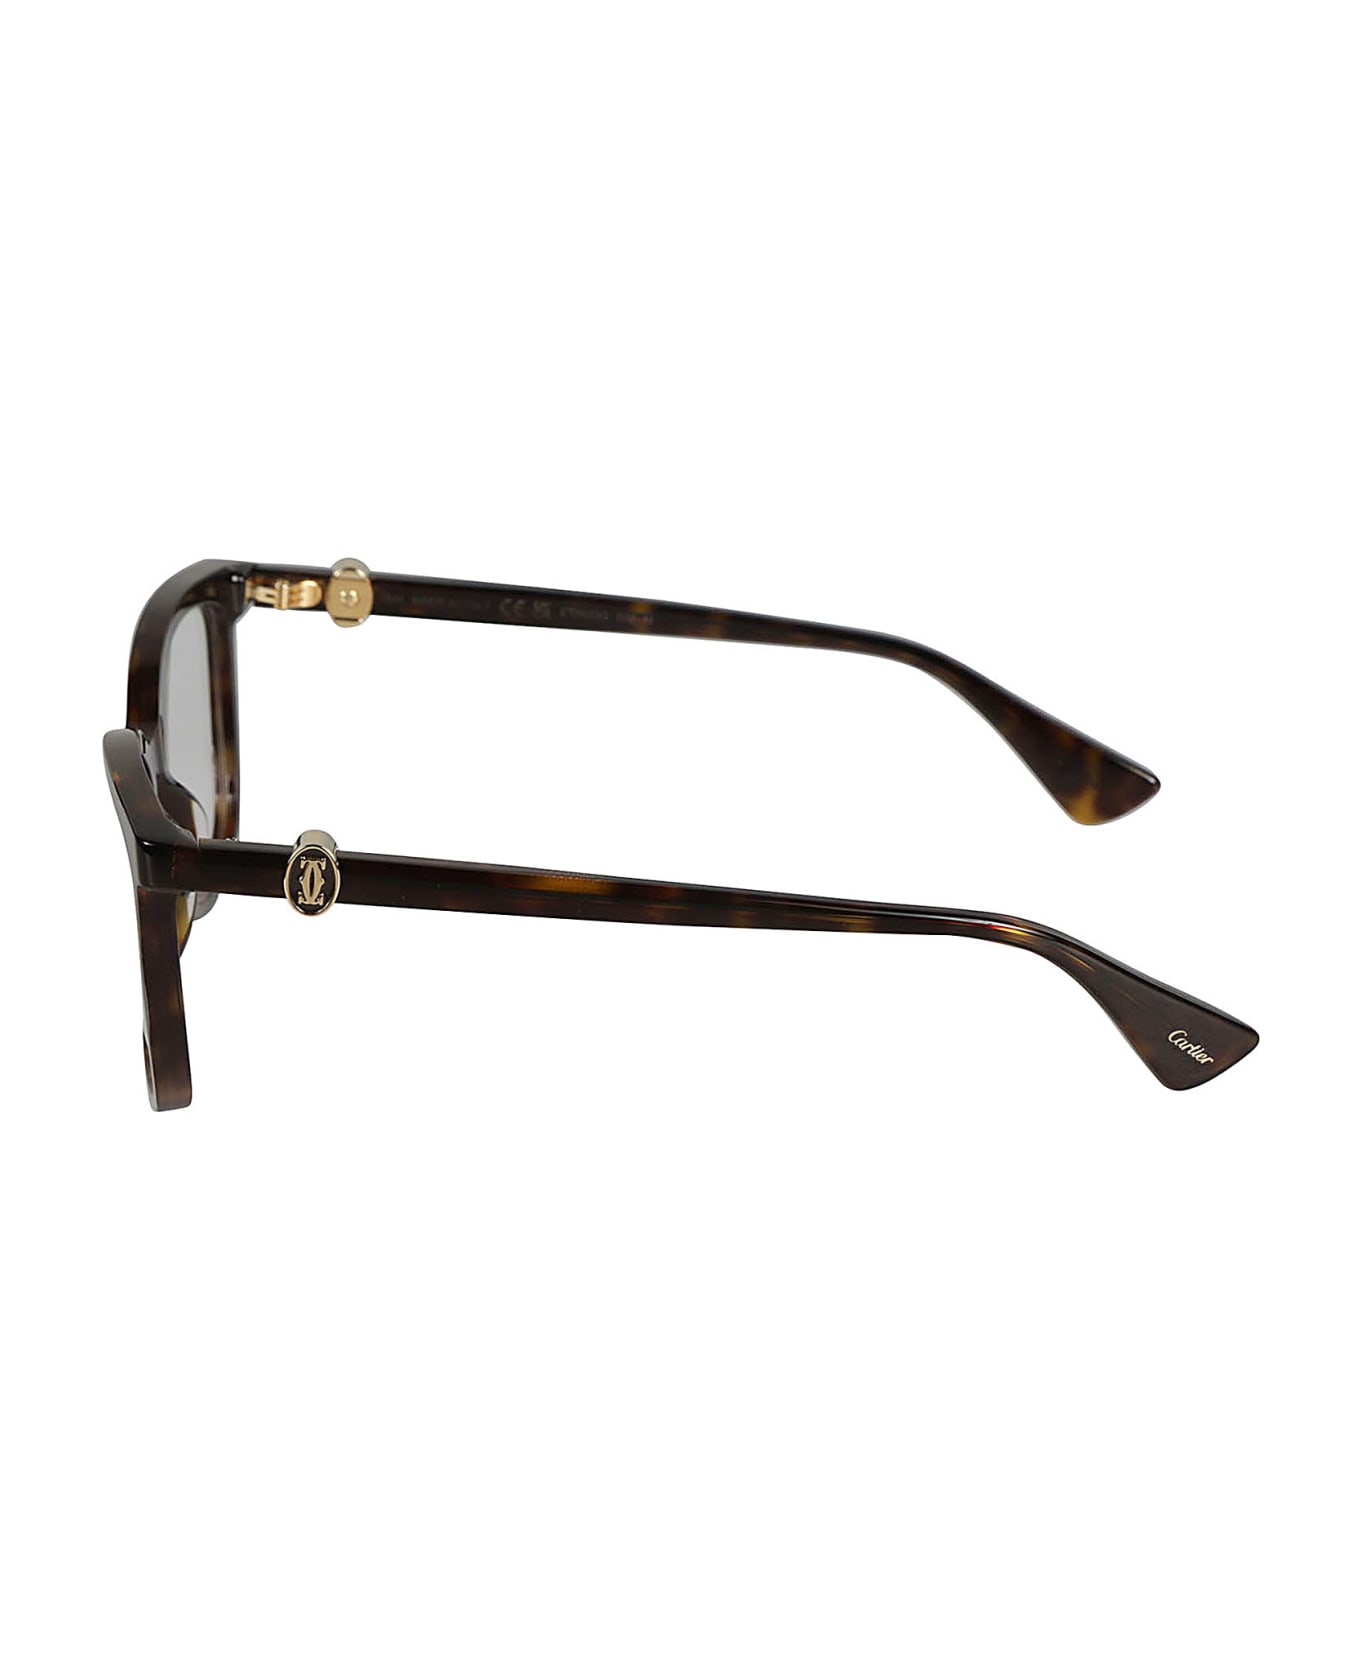 Cartier Eyewear Flame Effect Clear Lens Glasses - Havana/Transparent